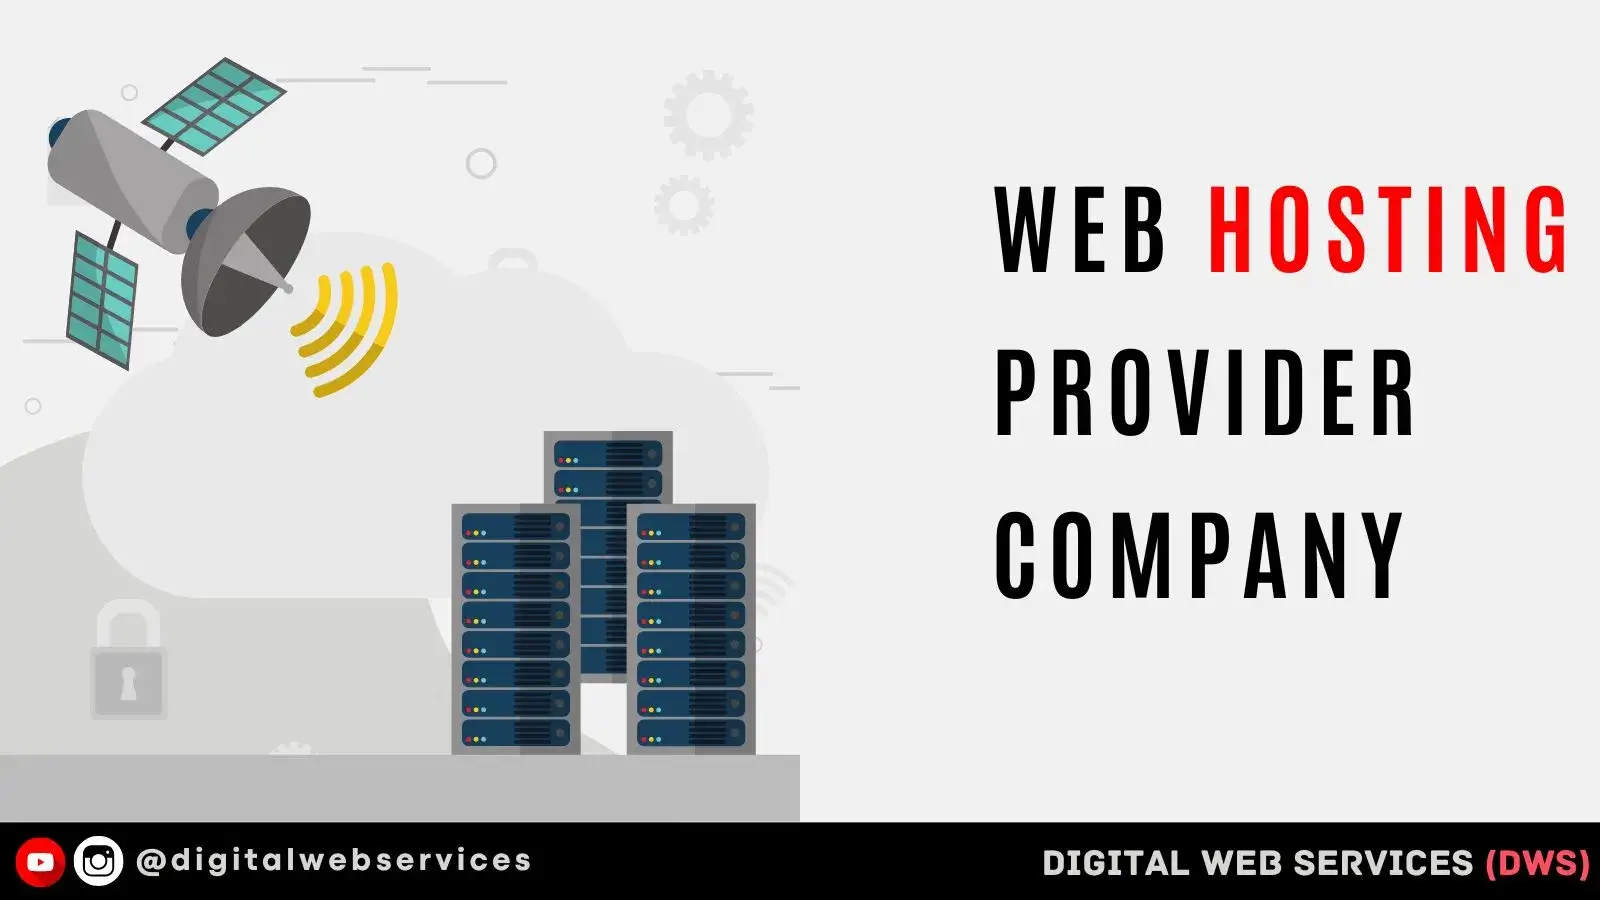 Web Hosting Provider Company